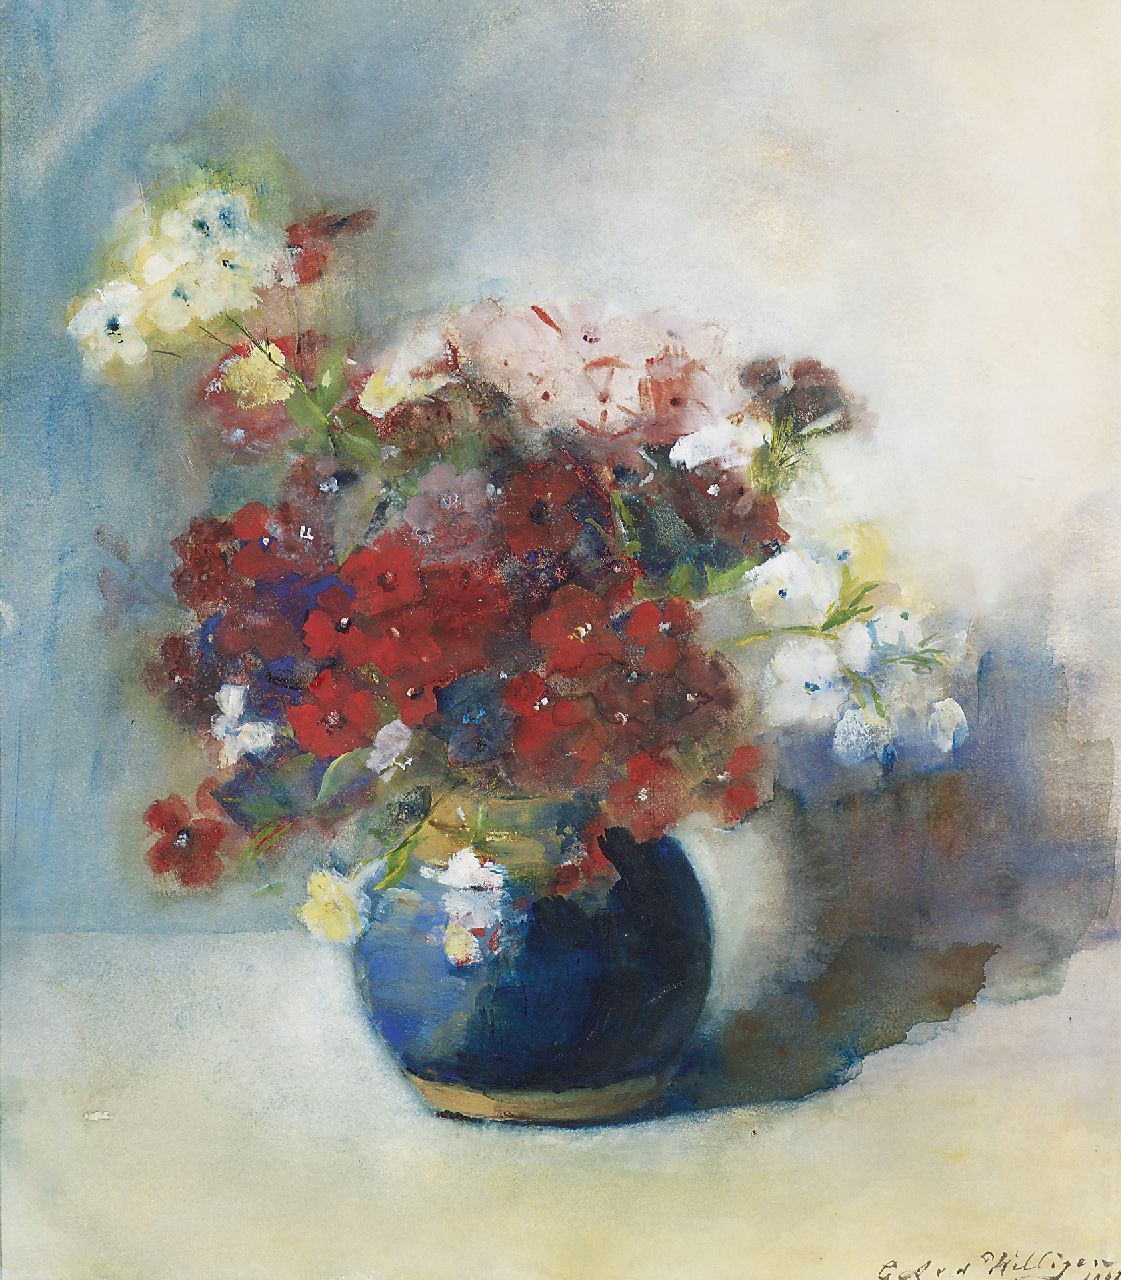 Chrisje van der Willigen | Flowers in blue vase, watercolour on paper, 42.0 x 37.5 cm, signed l.r. and dated 1902